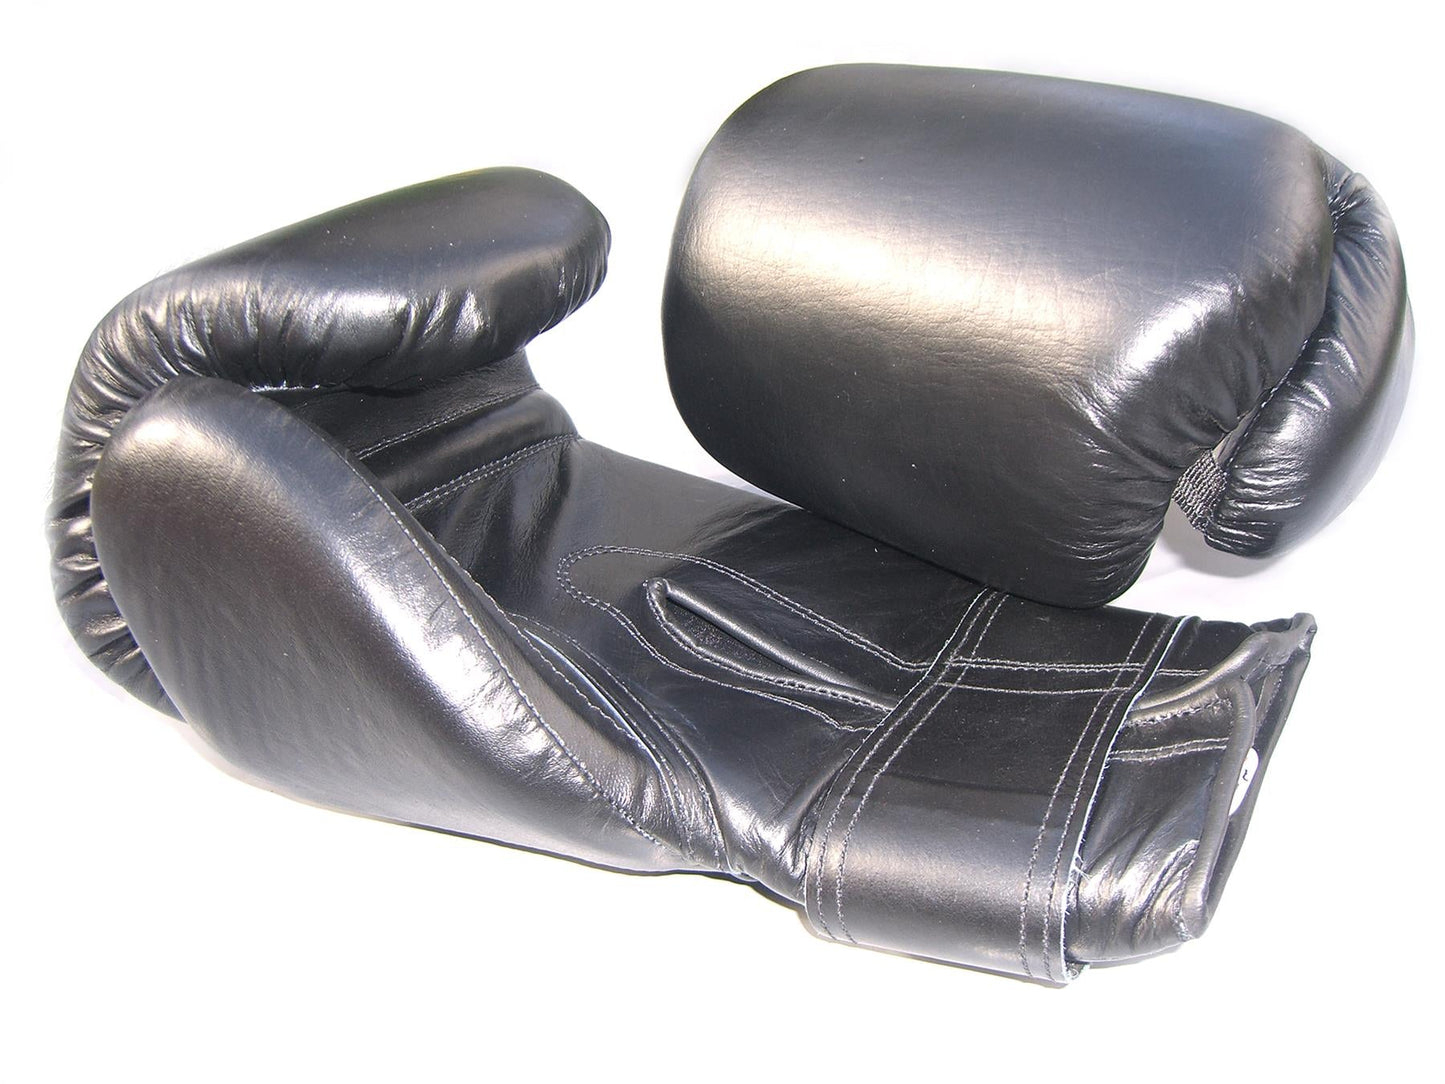 Buy Splay Workout Gloves-Boxing Gloves-Splay (UK) Limited-Splay UK Online